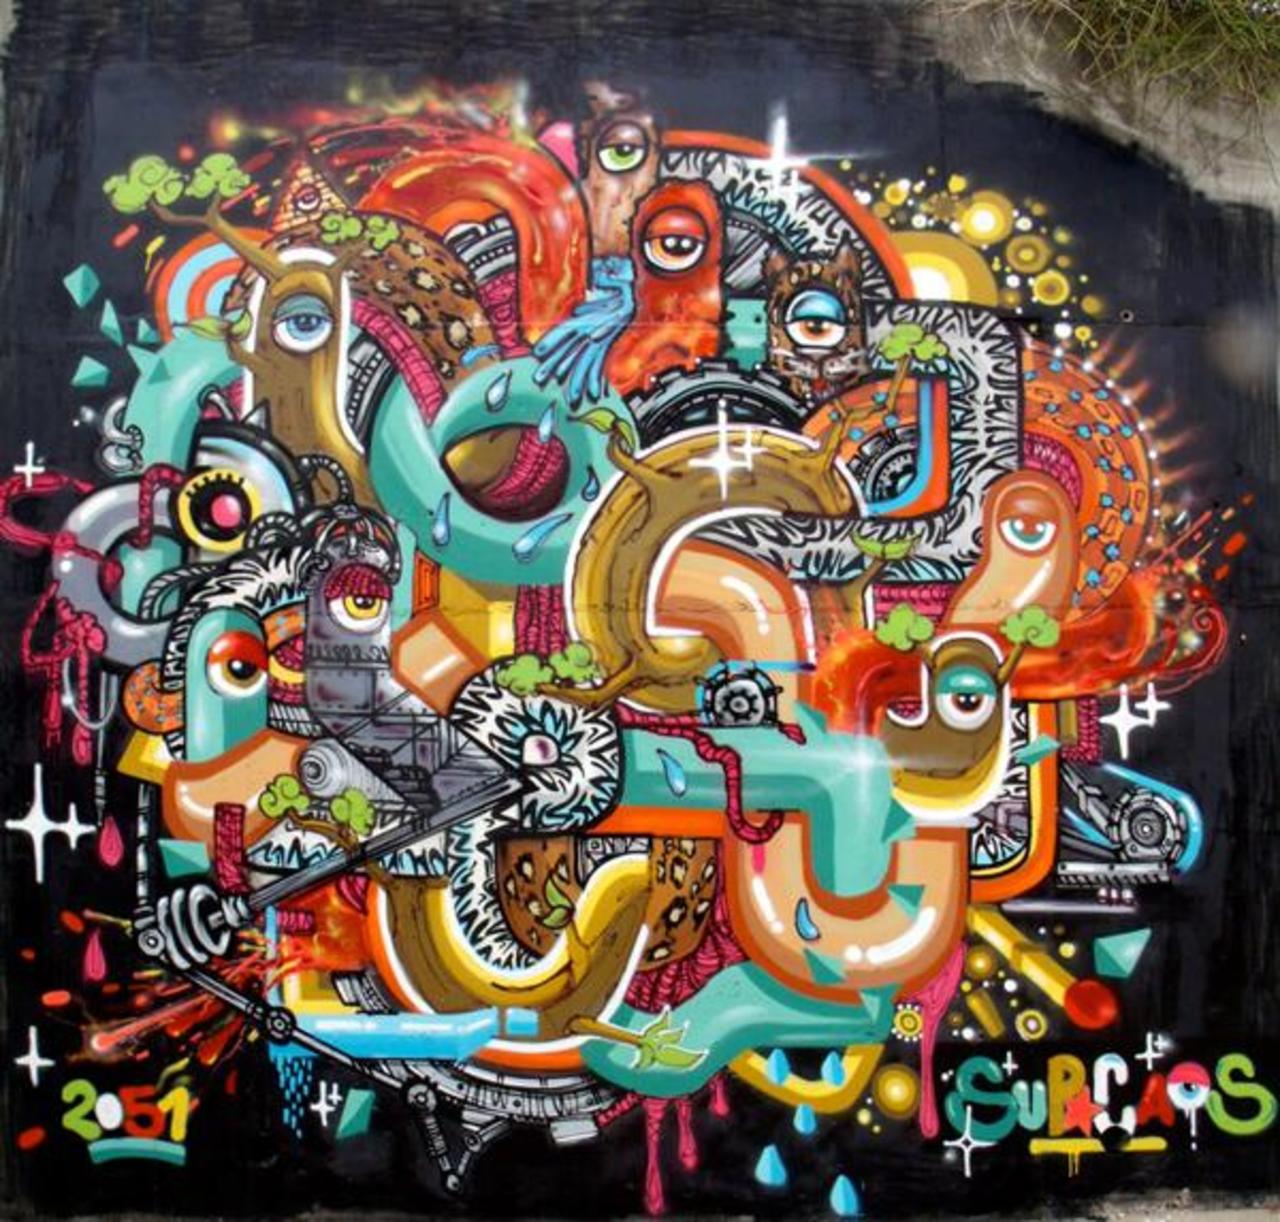 “@5putnik1: Cyclops Collage #graffiti #streetart #france #art #funky #dope . : http://t.co/A3g2Mc332E”